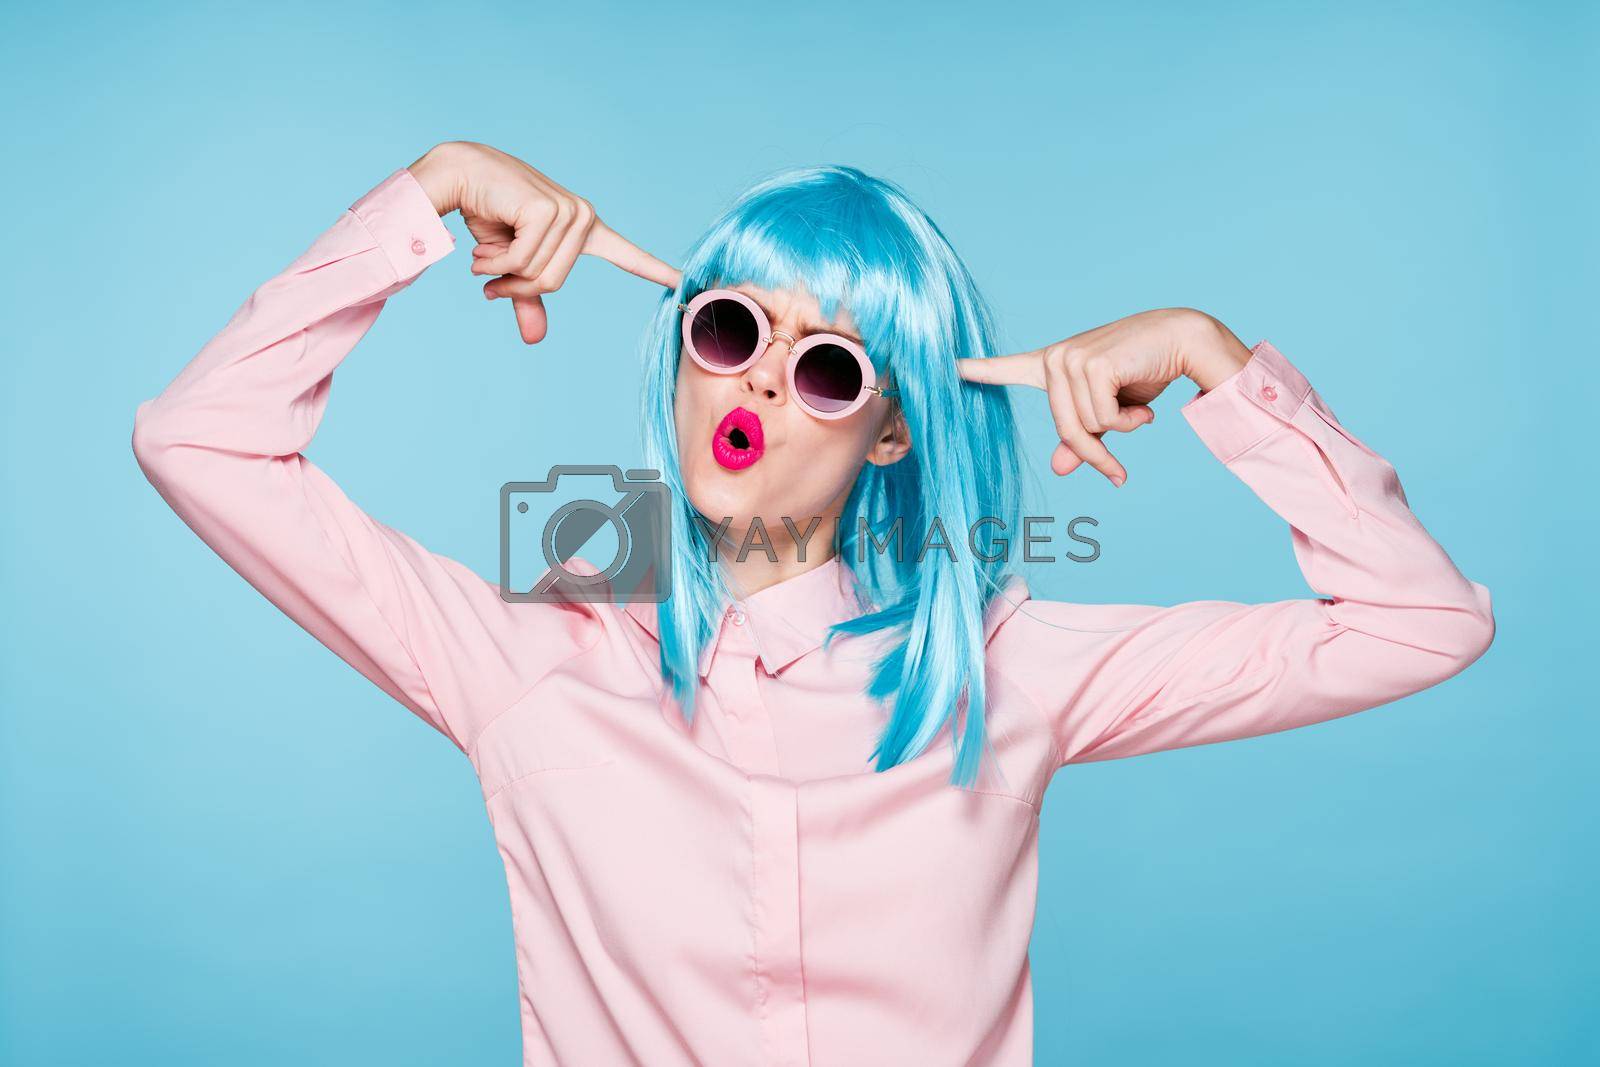 Glamorous woman blue wig makeup fashion posing. High quality photo